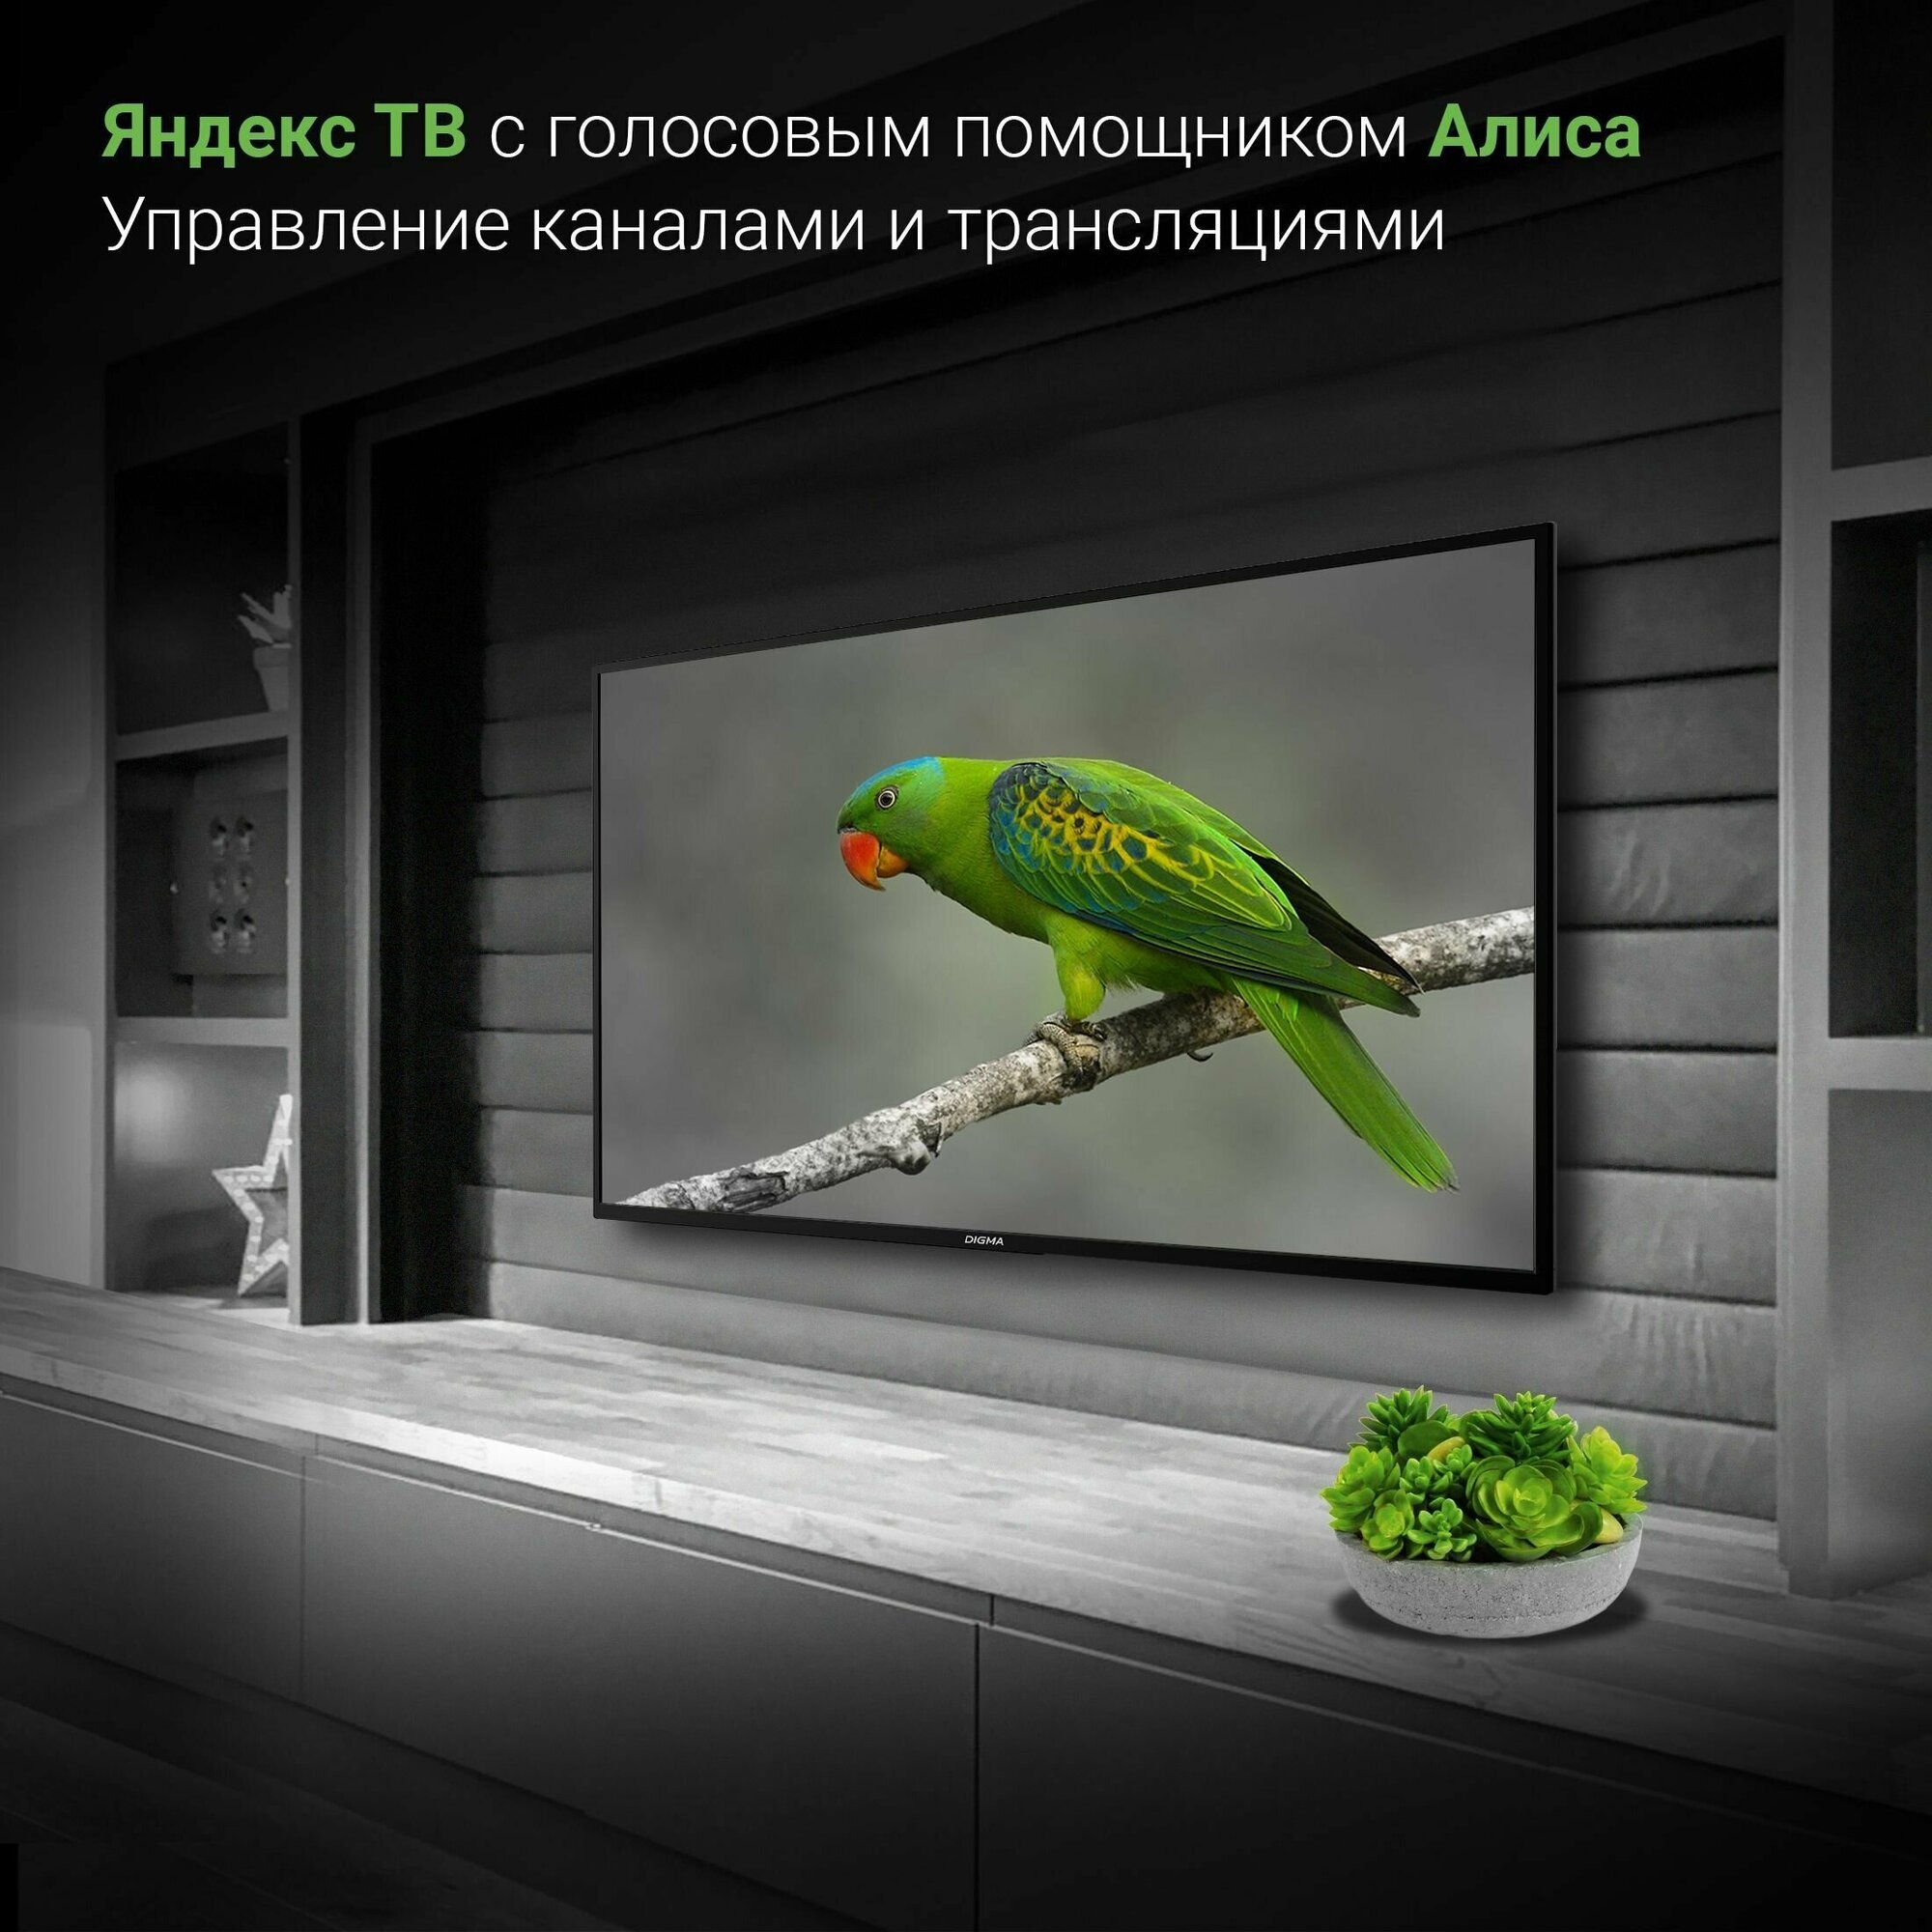 Телевизор LED Digma 43" DM-LED43UBB31 Яндекс.ТВ черный/4K Ultra HD/60Hz/DVB-T/DVB-T2/DVB-C/DVB-S/DVB-S2/USB/WiFi/Smart TV - фотография № 3